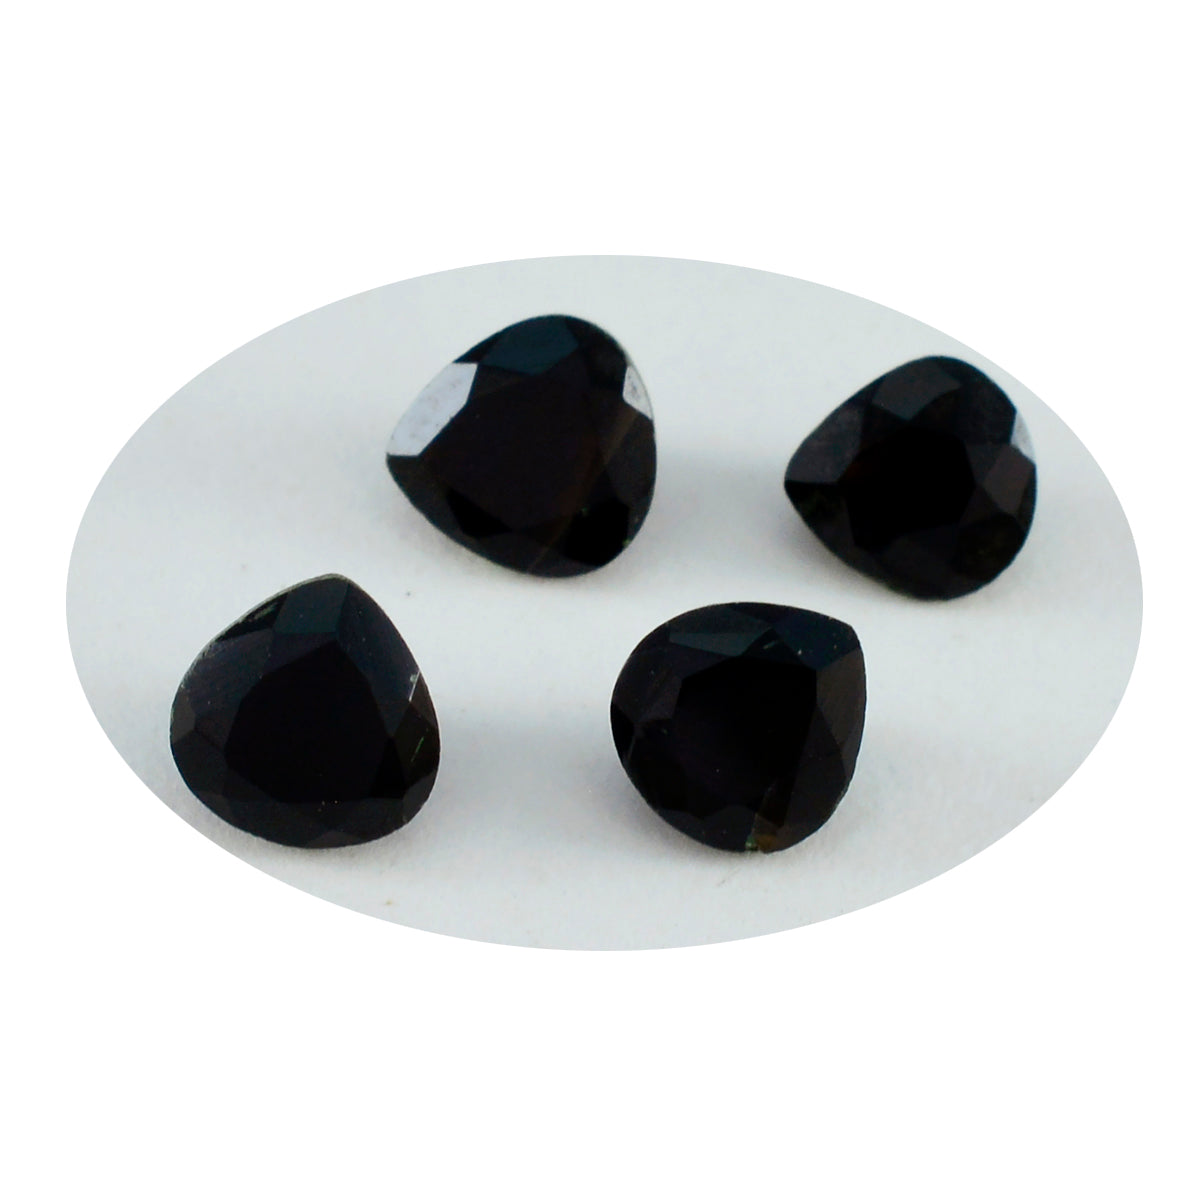 Riyogems 1PC Genuine Black Onyx Faceted 8x8 mm Heart Shape A Quality Stone